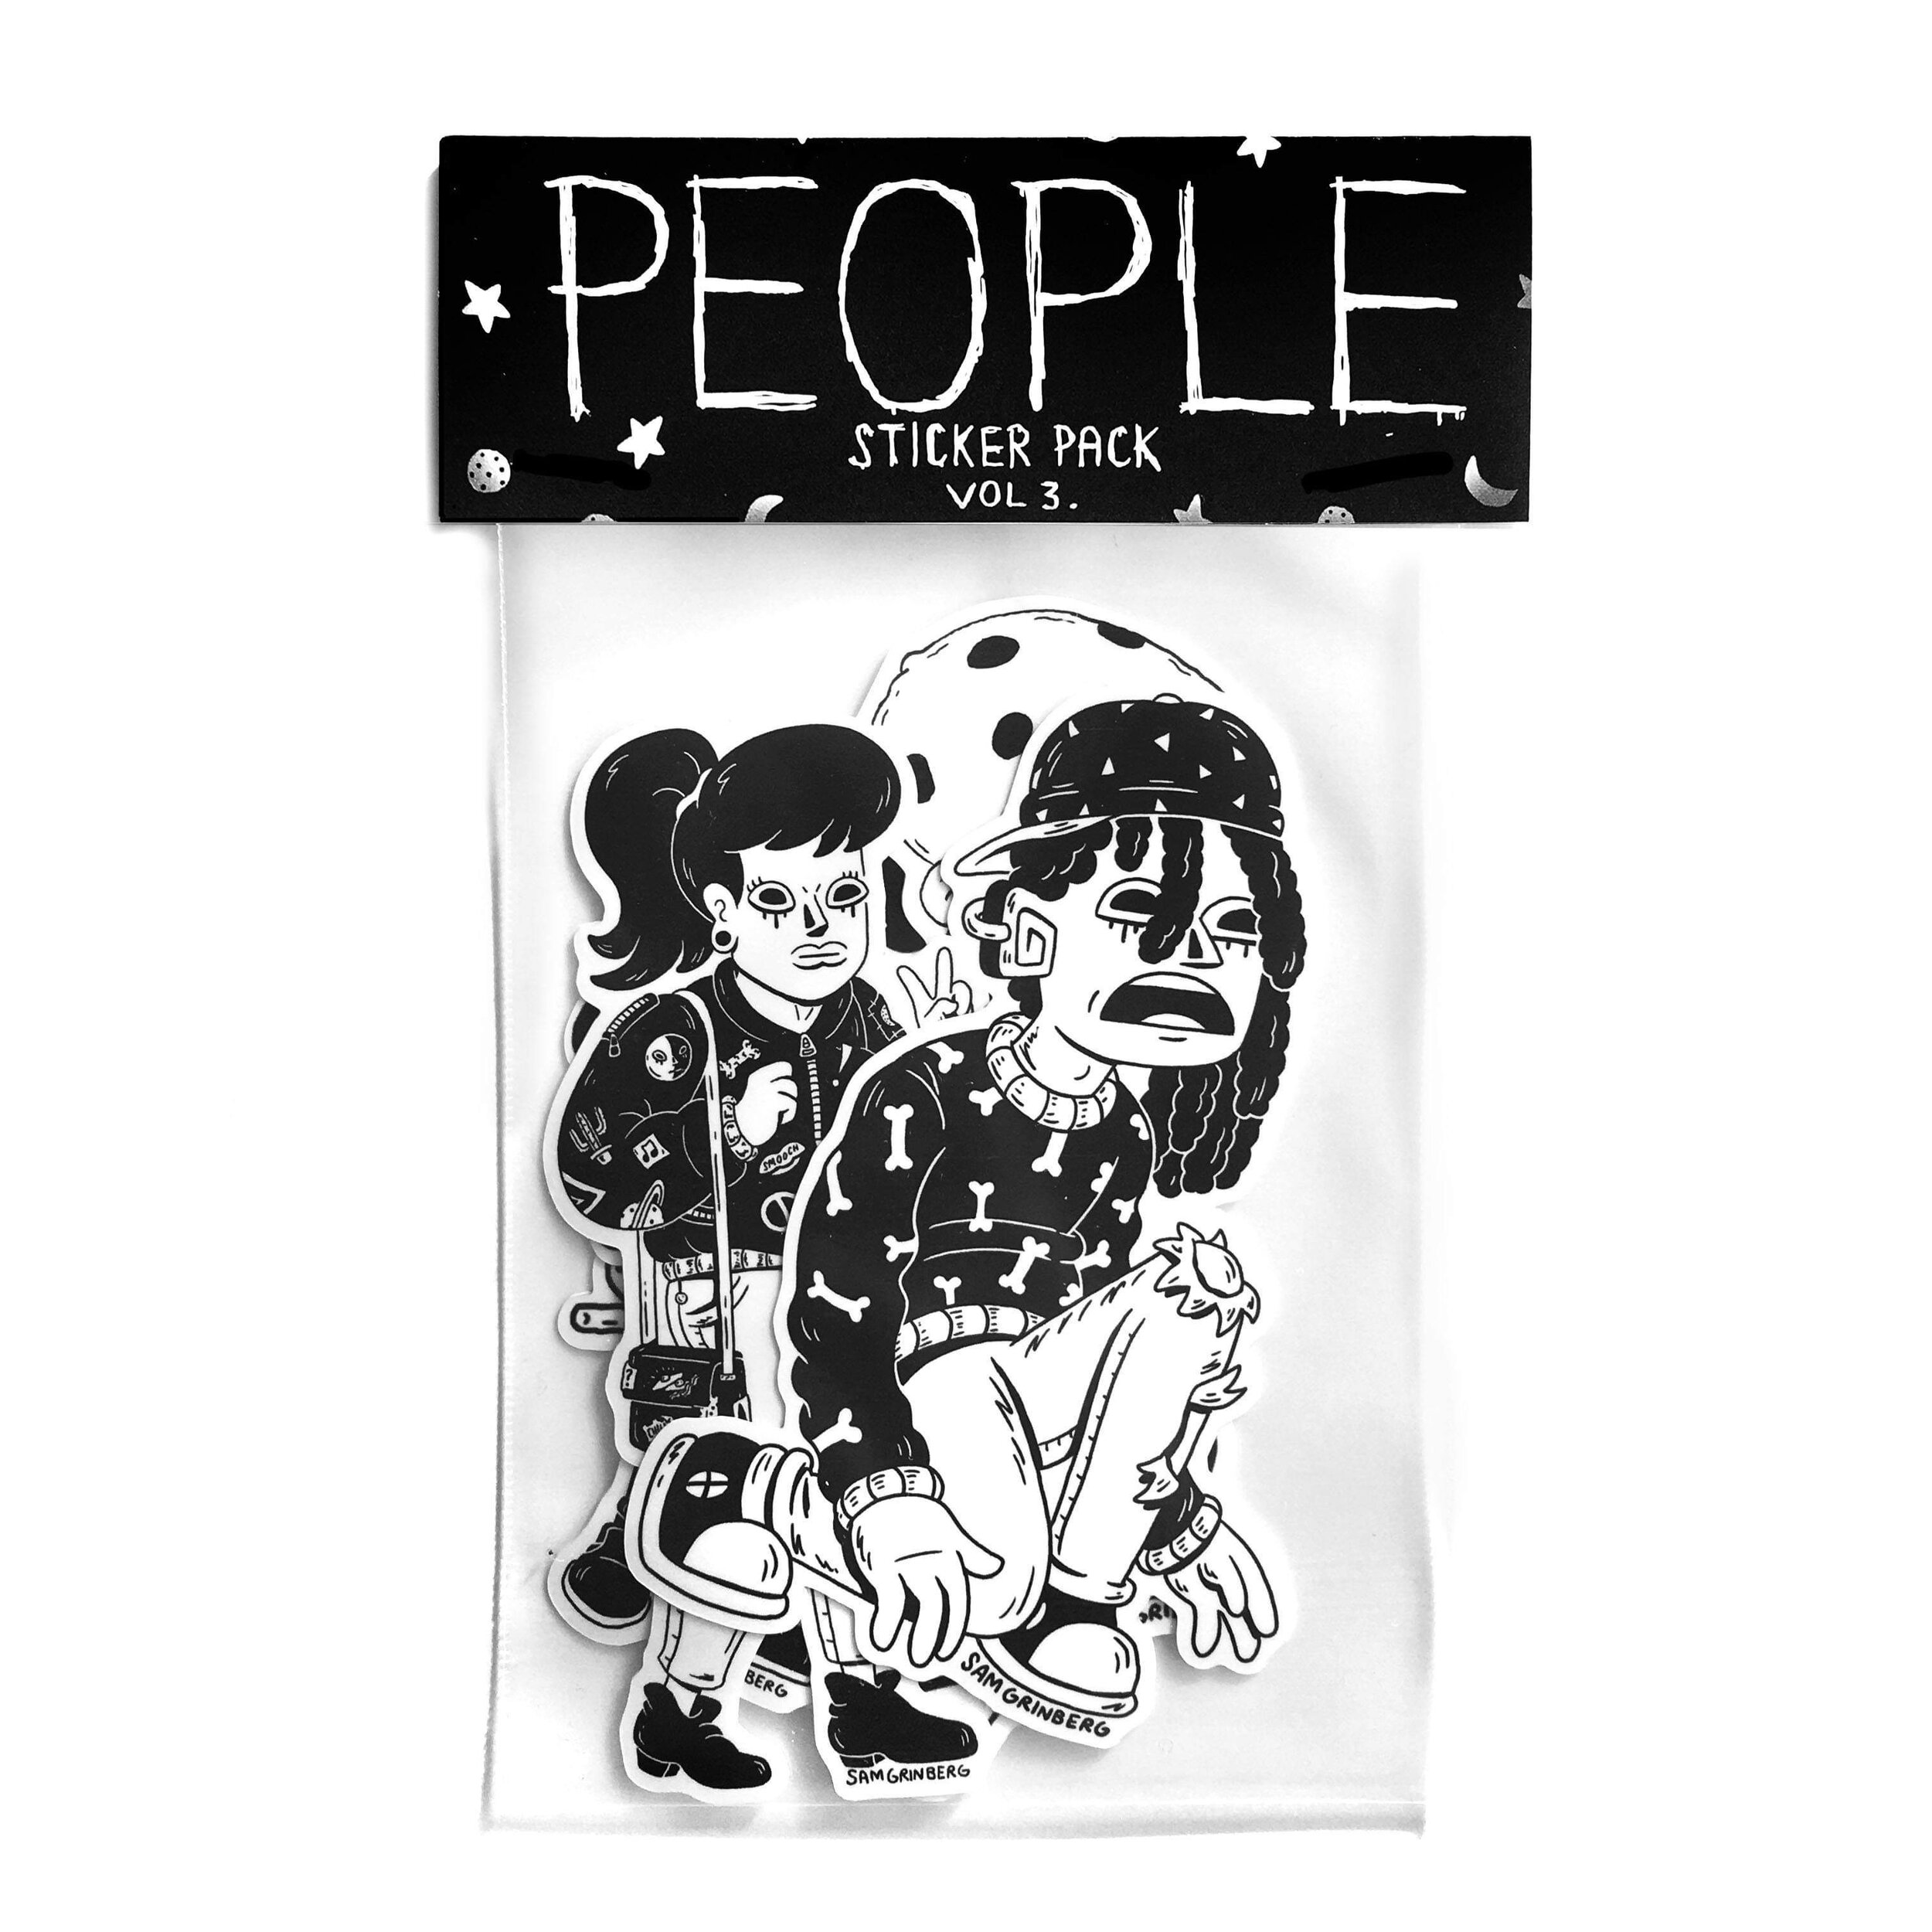 People Sticker Pack Vol 3.